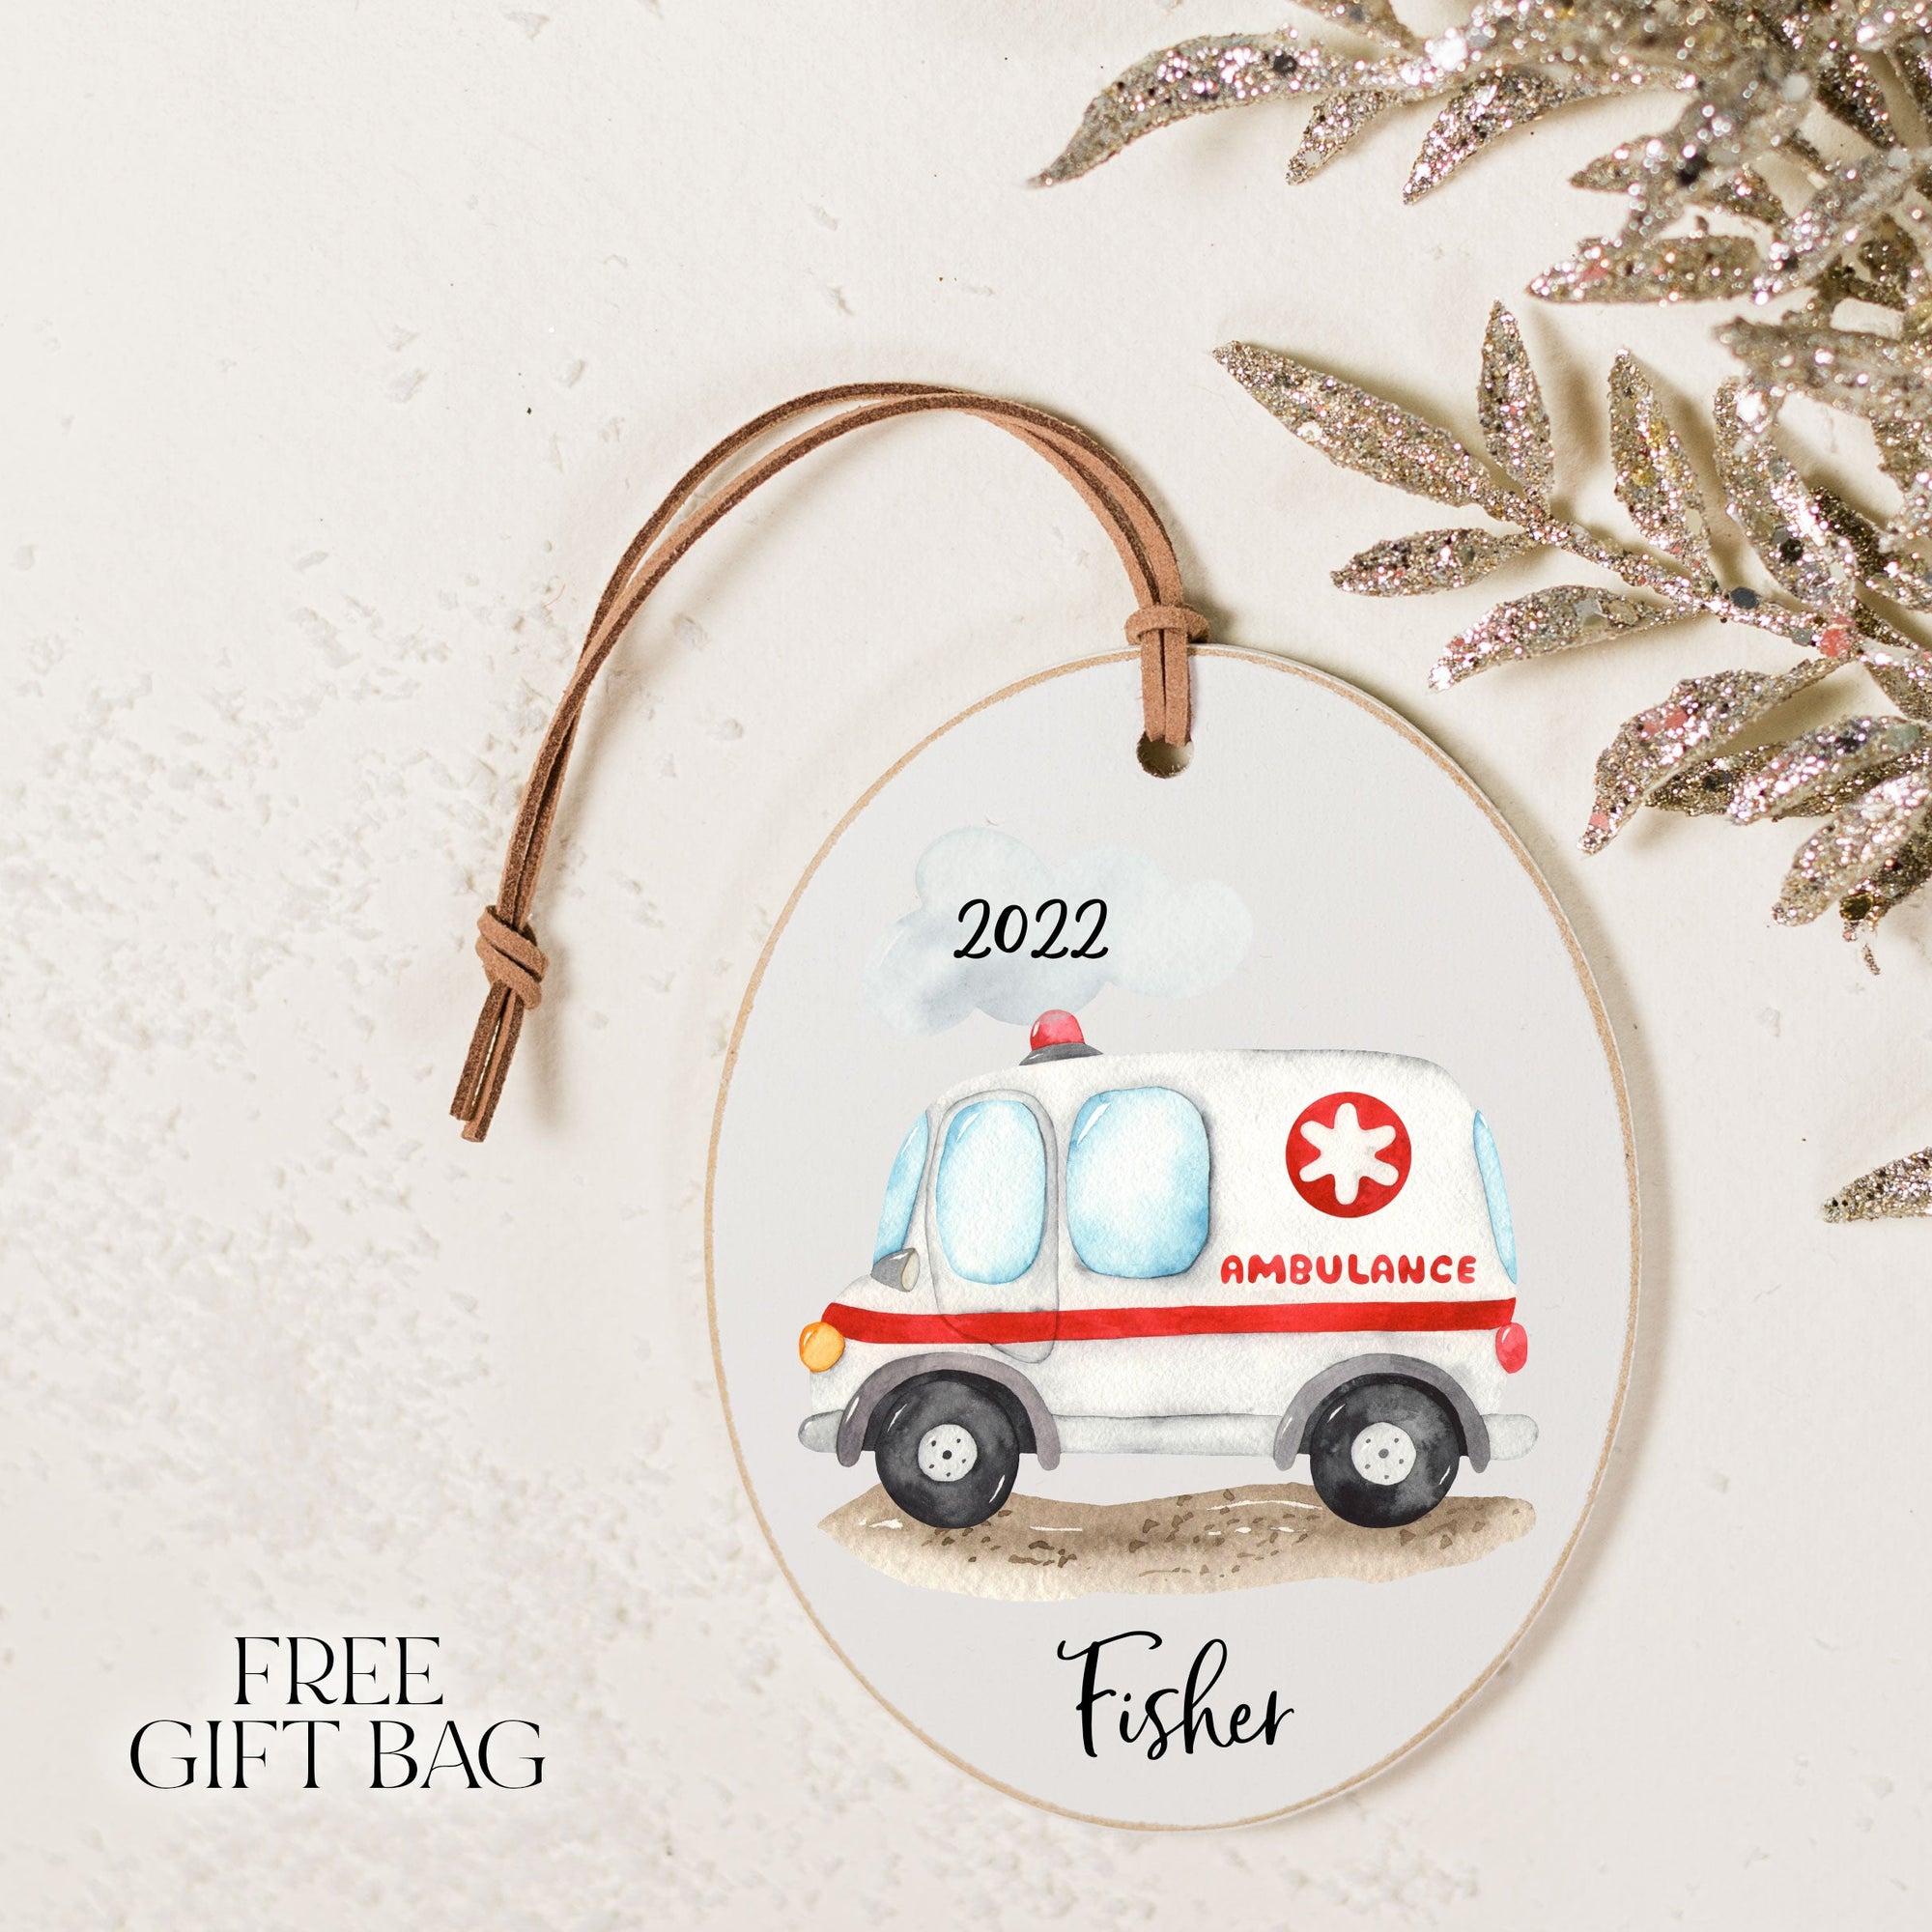 Customizable Ornament | Ambulance Holiday Ornaments The WAREHOUSE Studio 